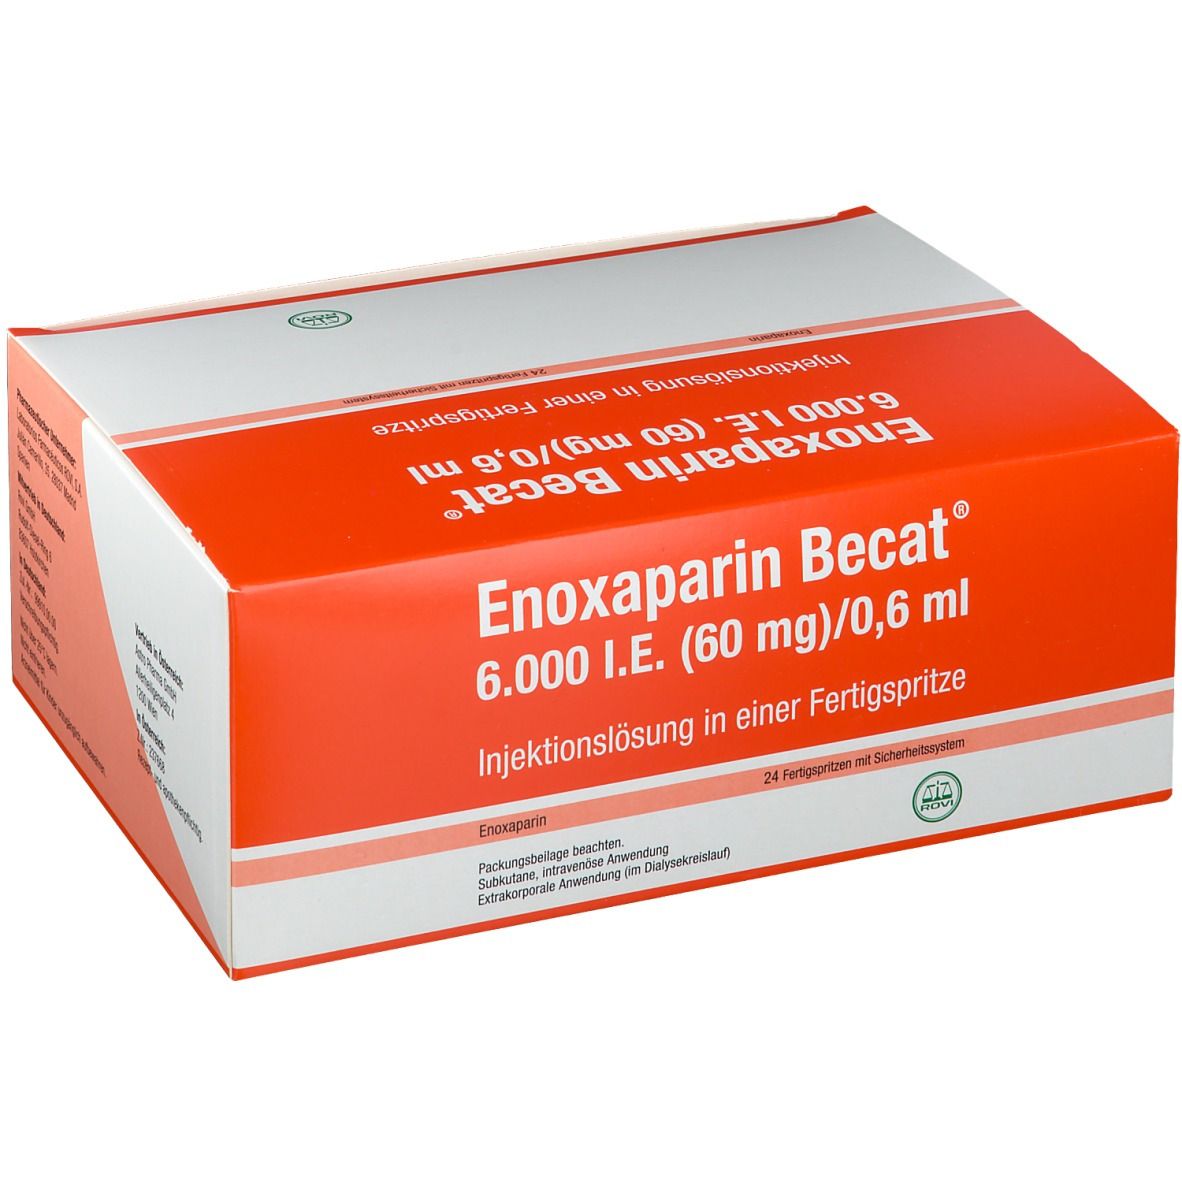 Enoxaparin Becat® 6.000 I.E. 60 mg/0,6 ml